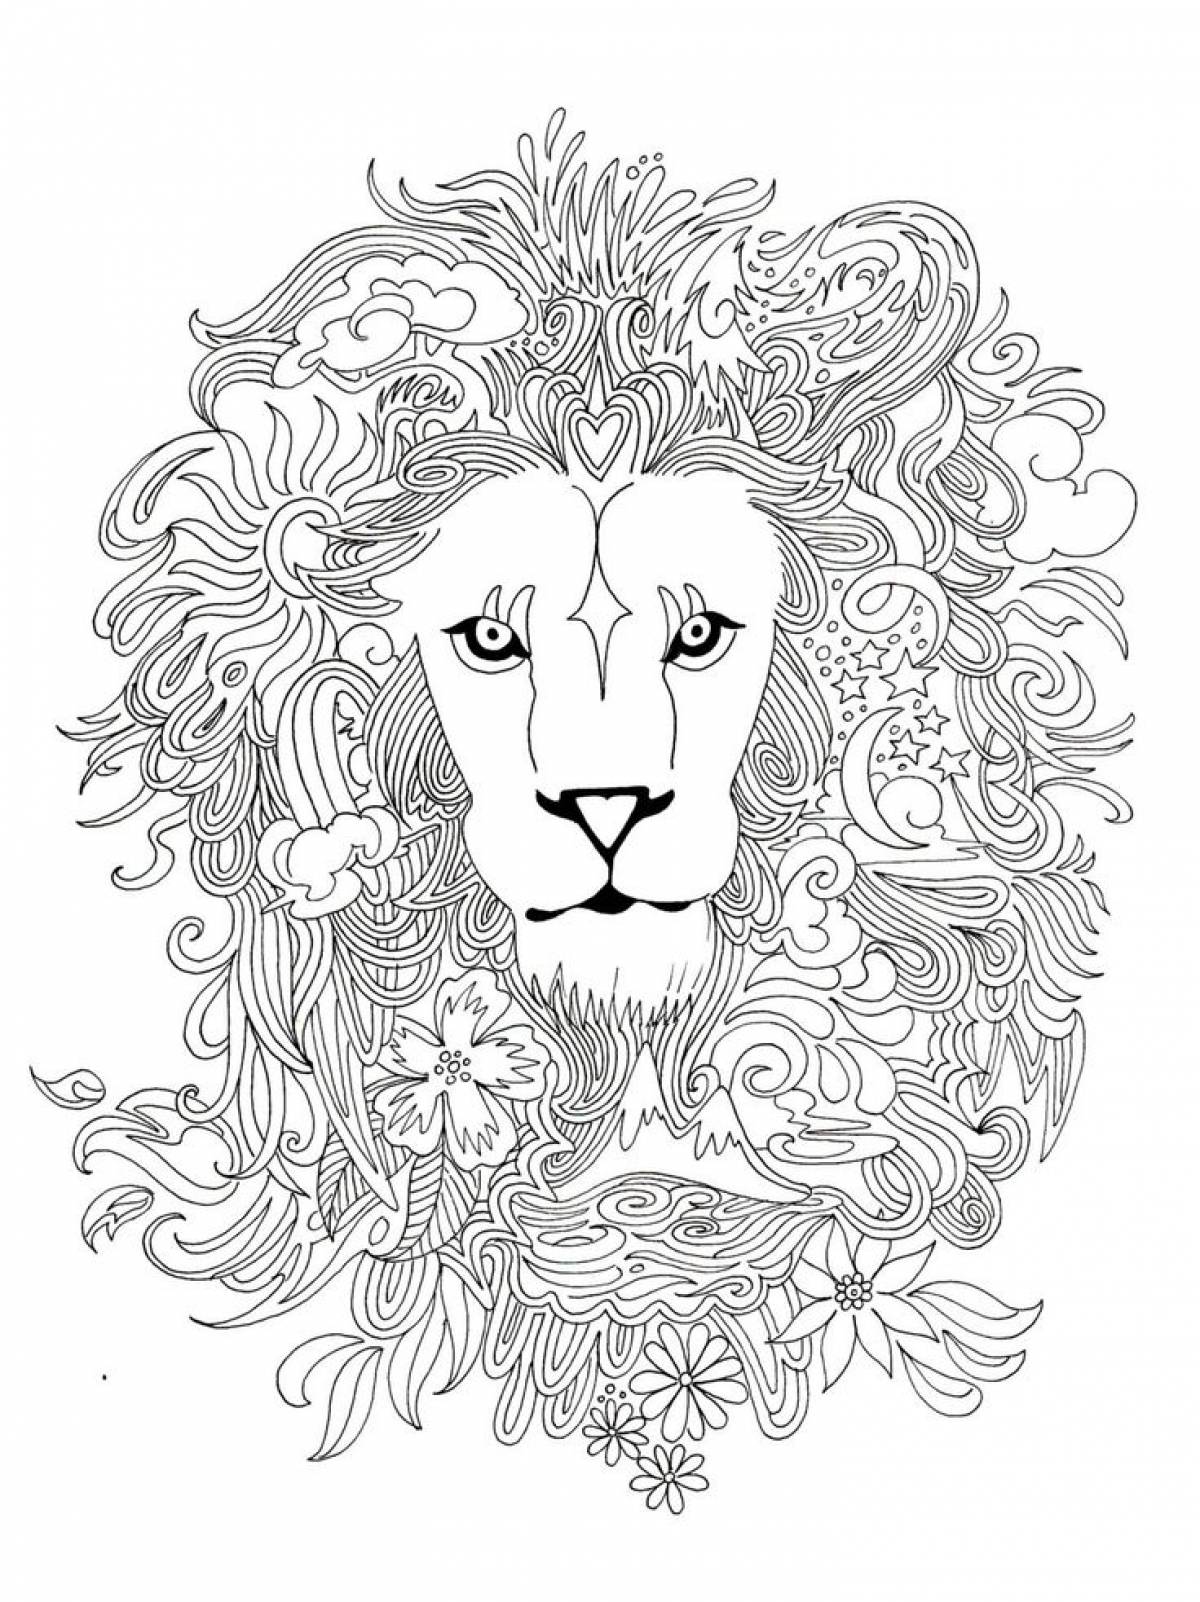 Lion in patterns